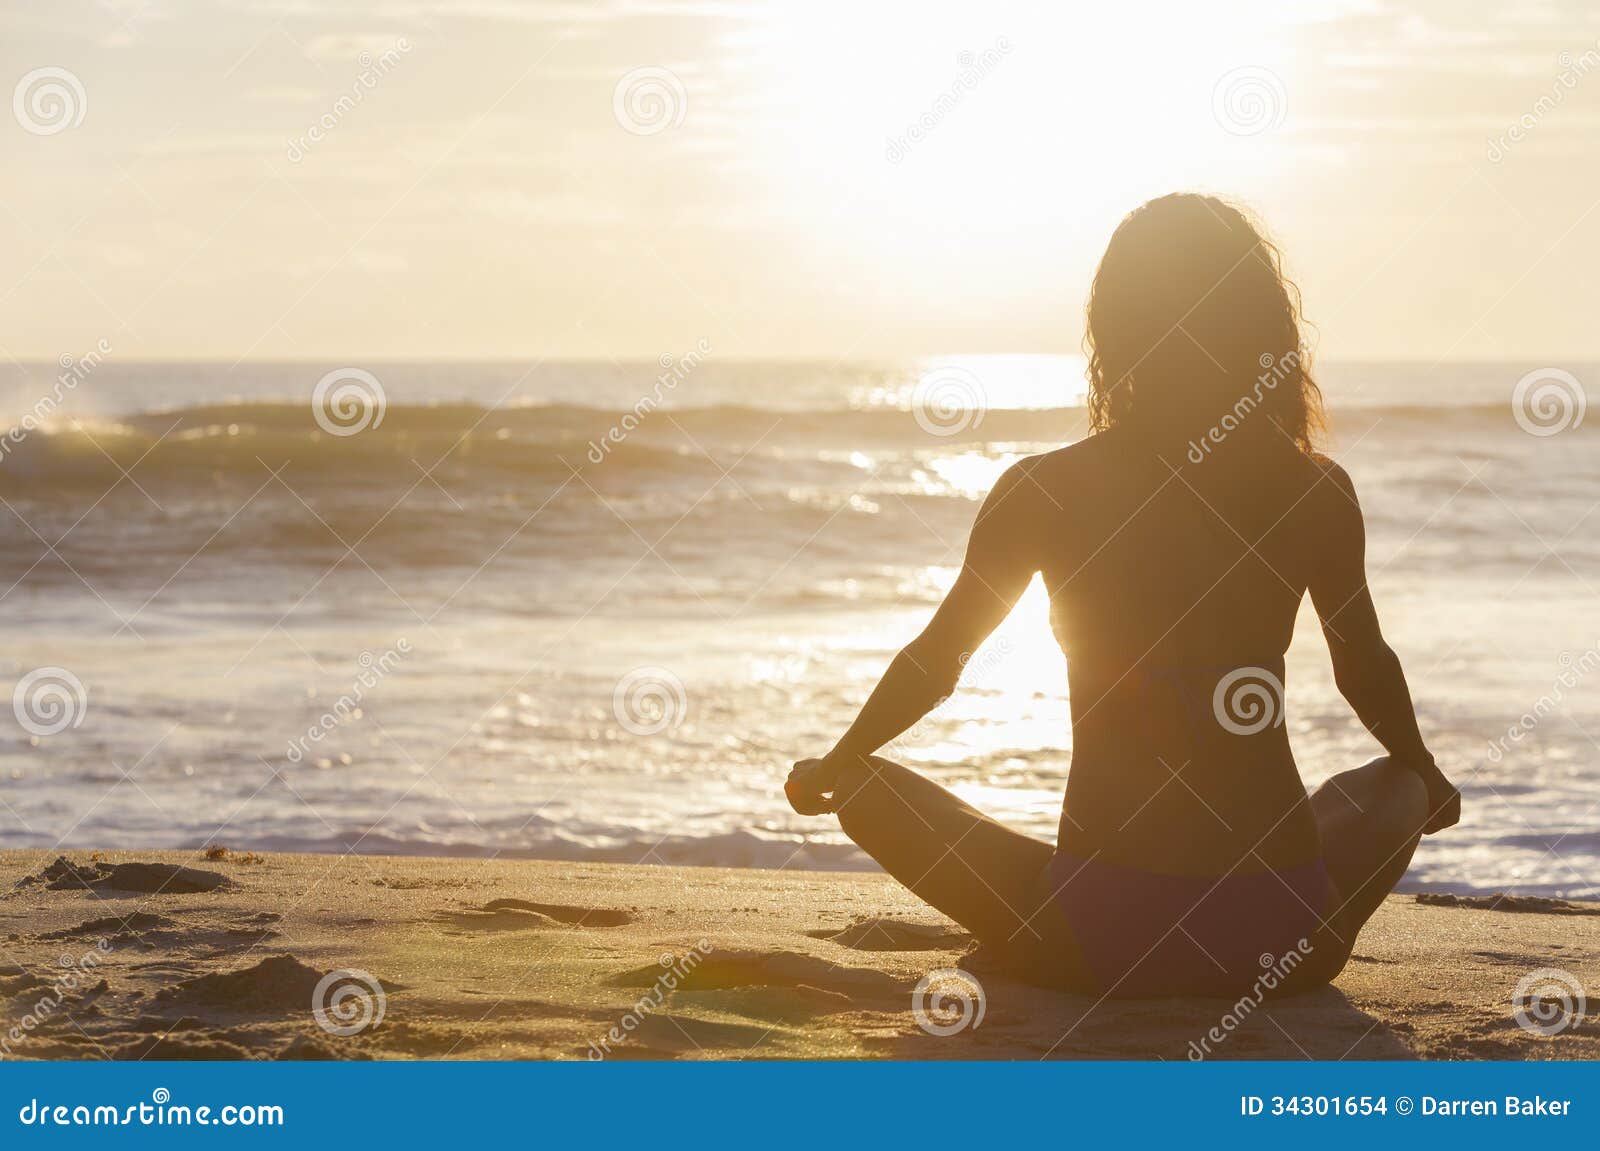 151,073 Beach Bikini Girl Stock Photos image